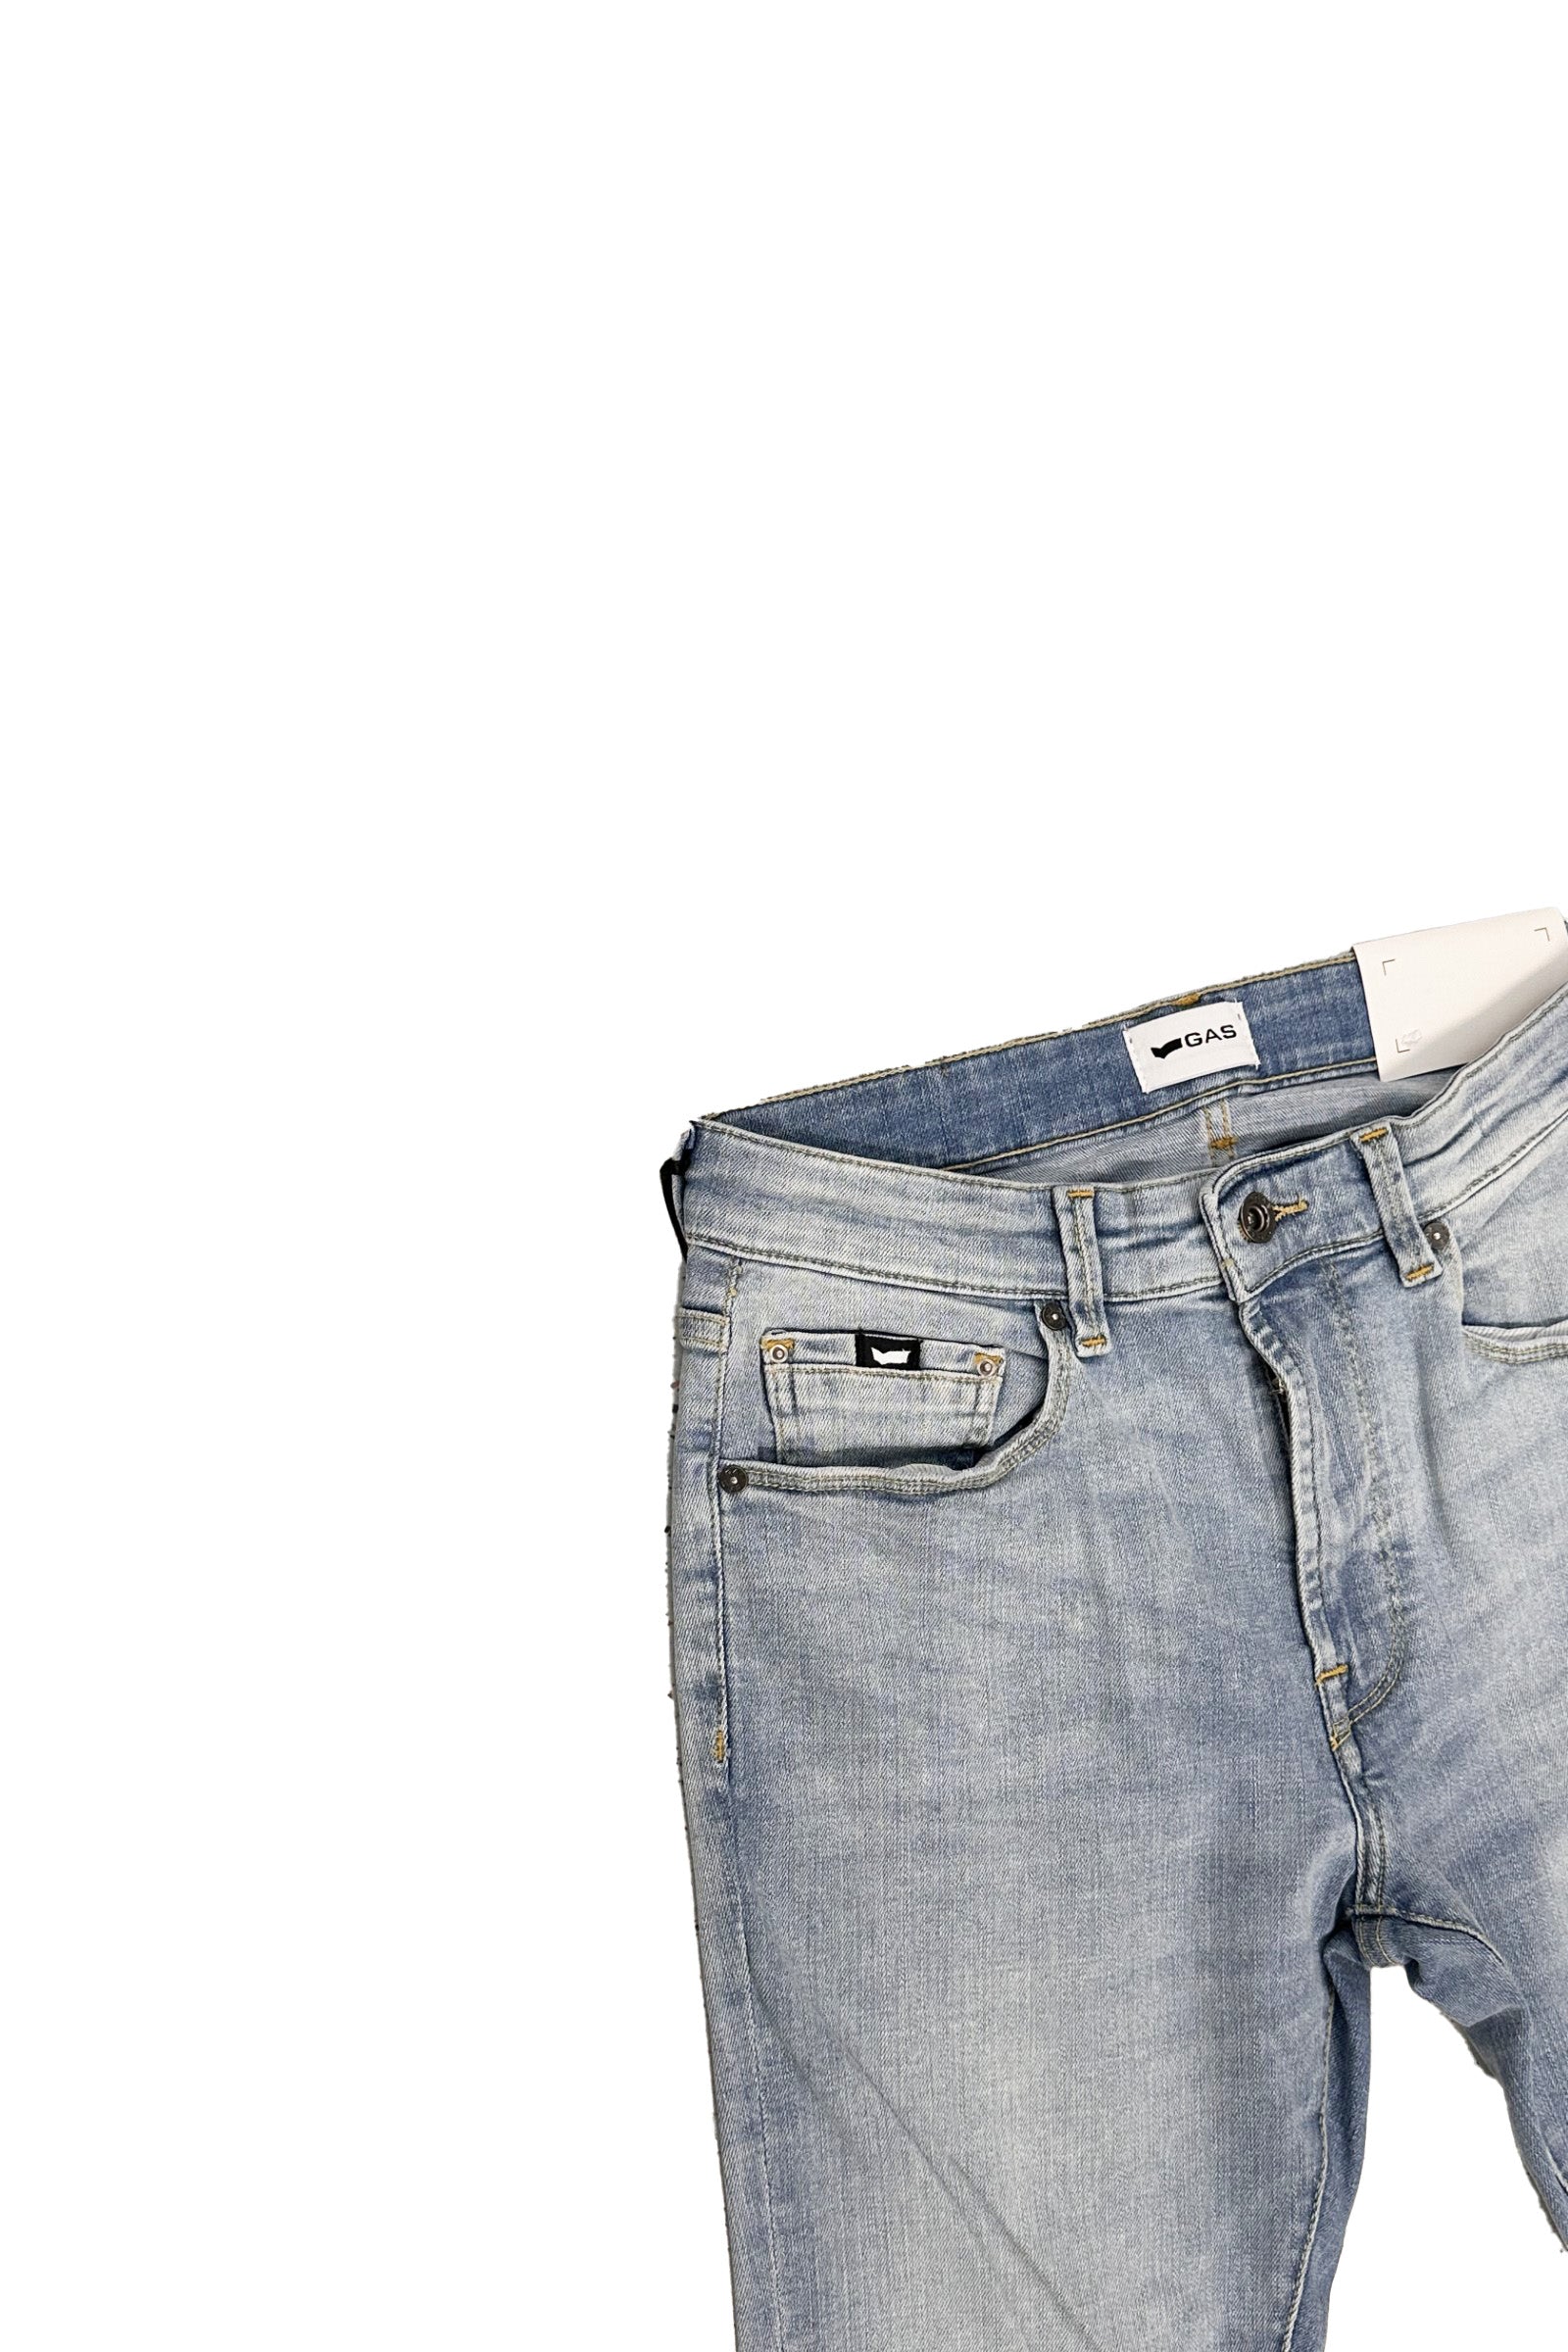 Sax Zip Rev 5 Pocket in Light Blue Ligh Jeans GAS   